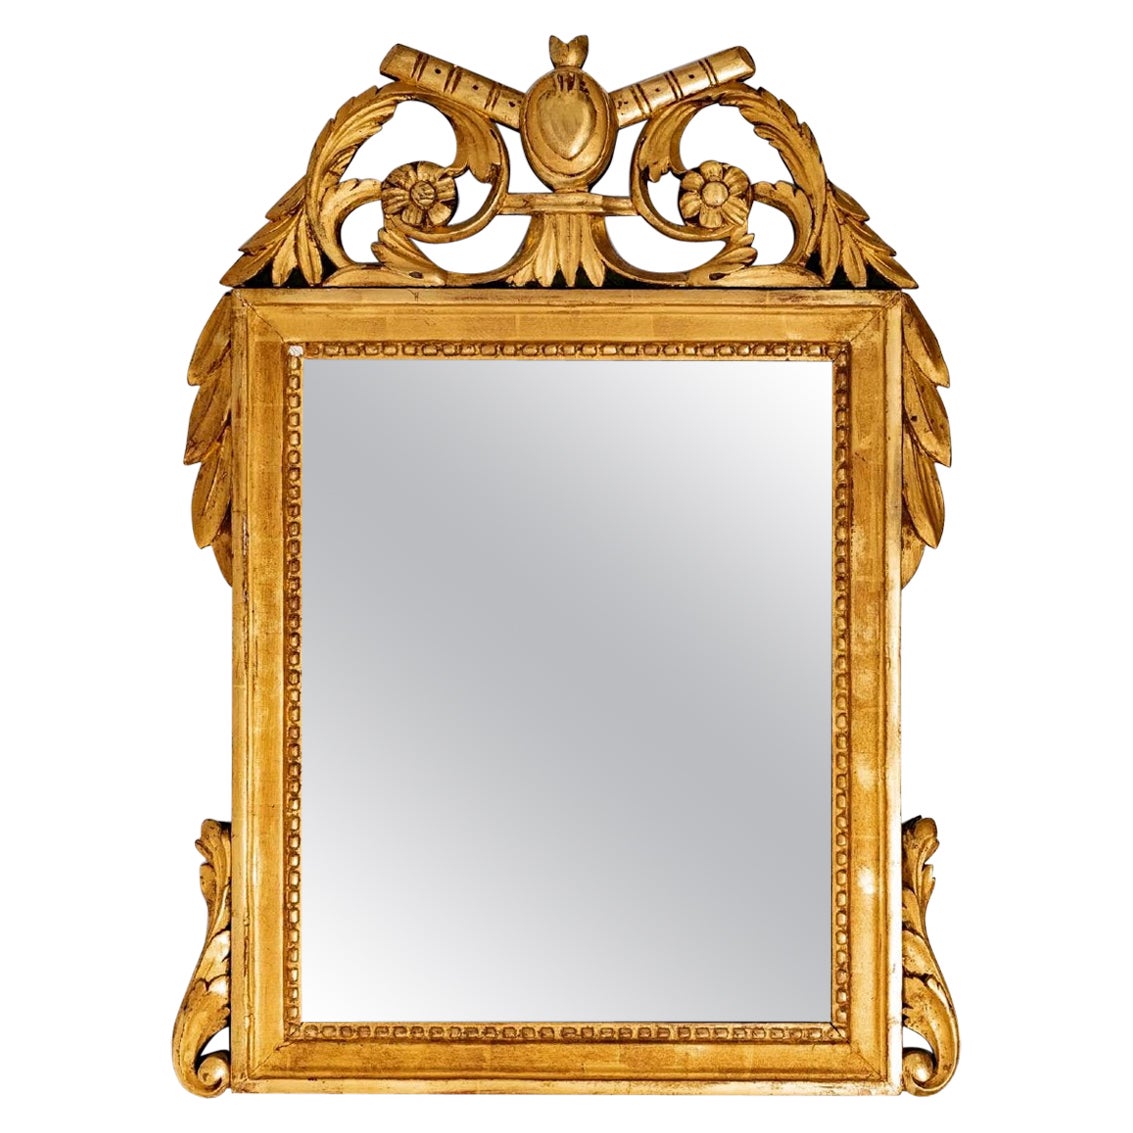 Gilded Wood Mirror - Louis XVI - Sacred Heart Devotion - Period : XVIIIth